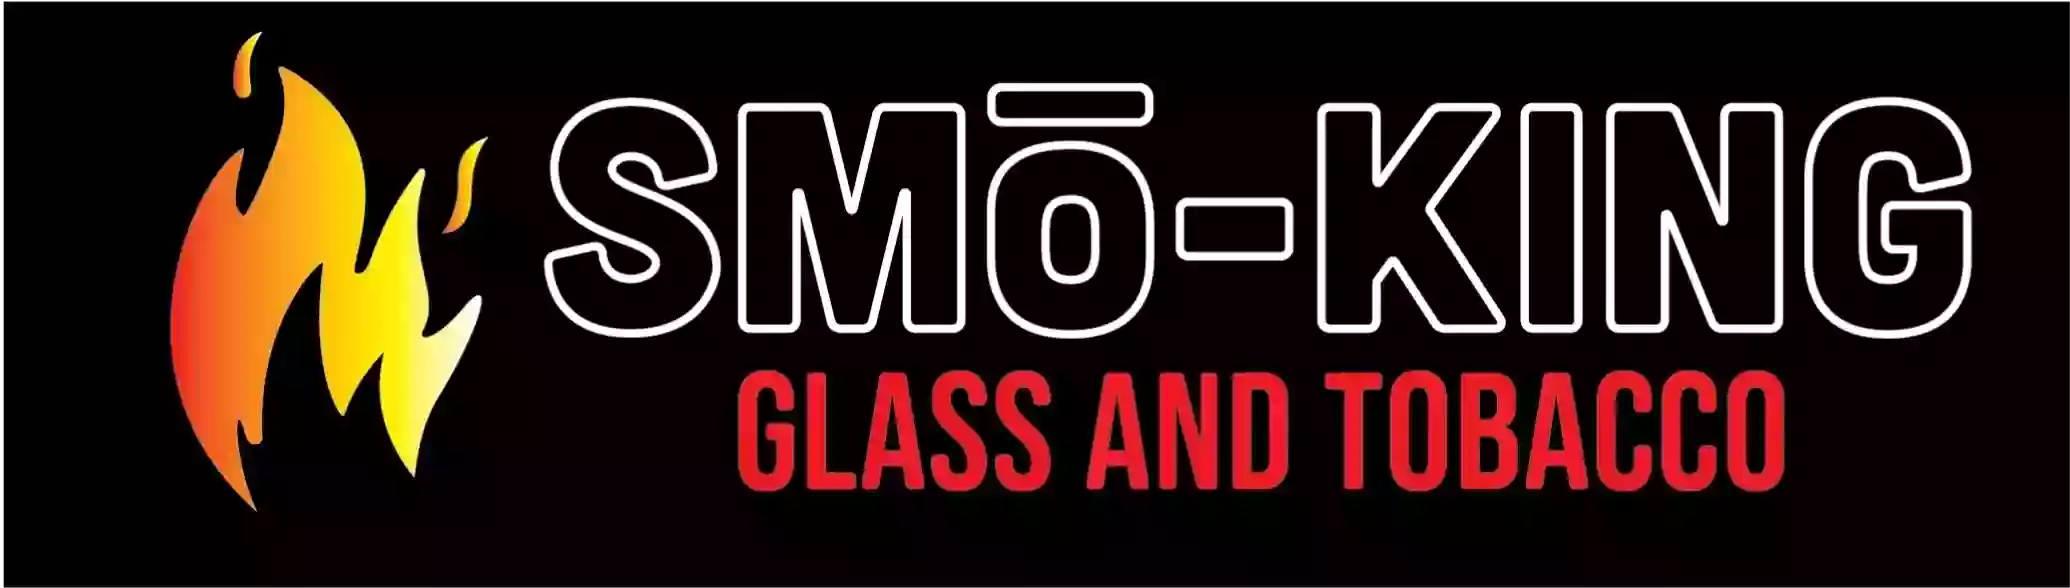 Smo-King Glass & Tobacco